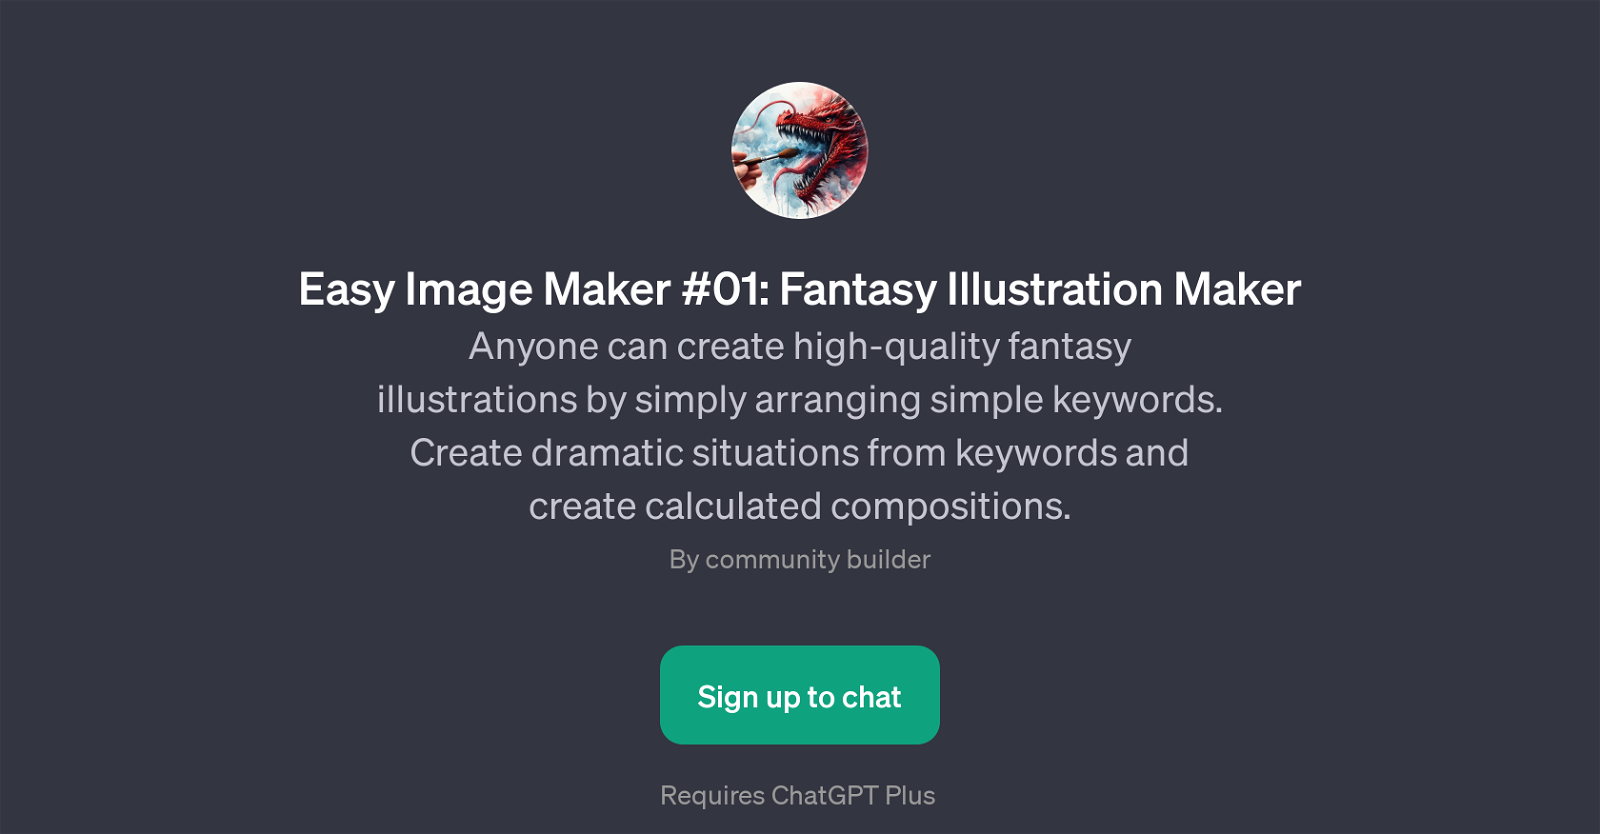 Easy Image Maker #01: Fantasy Illustration Maker website